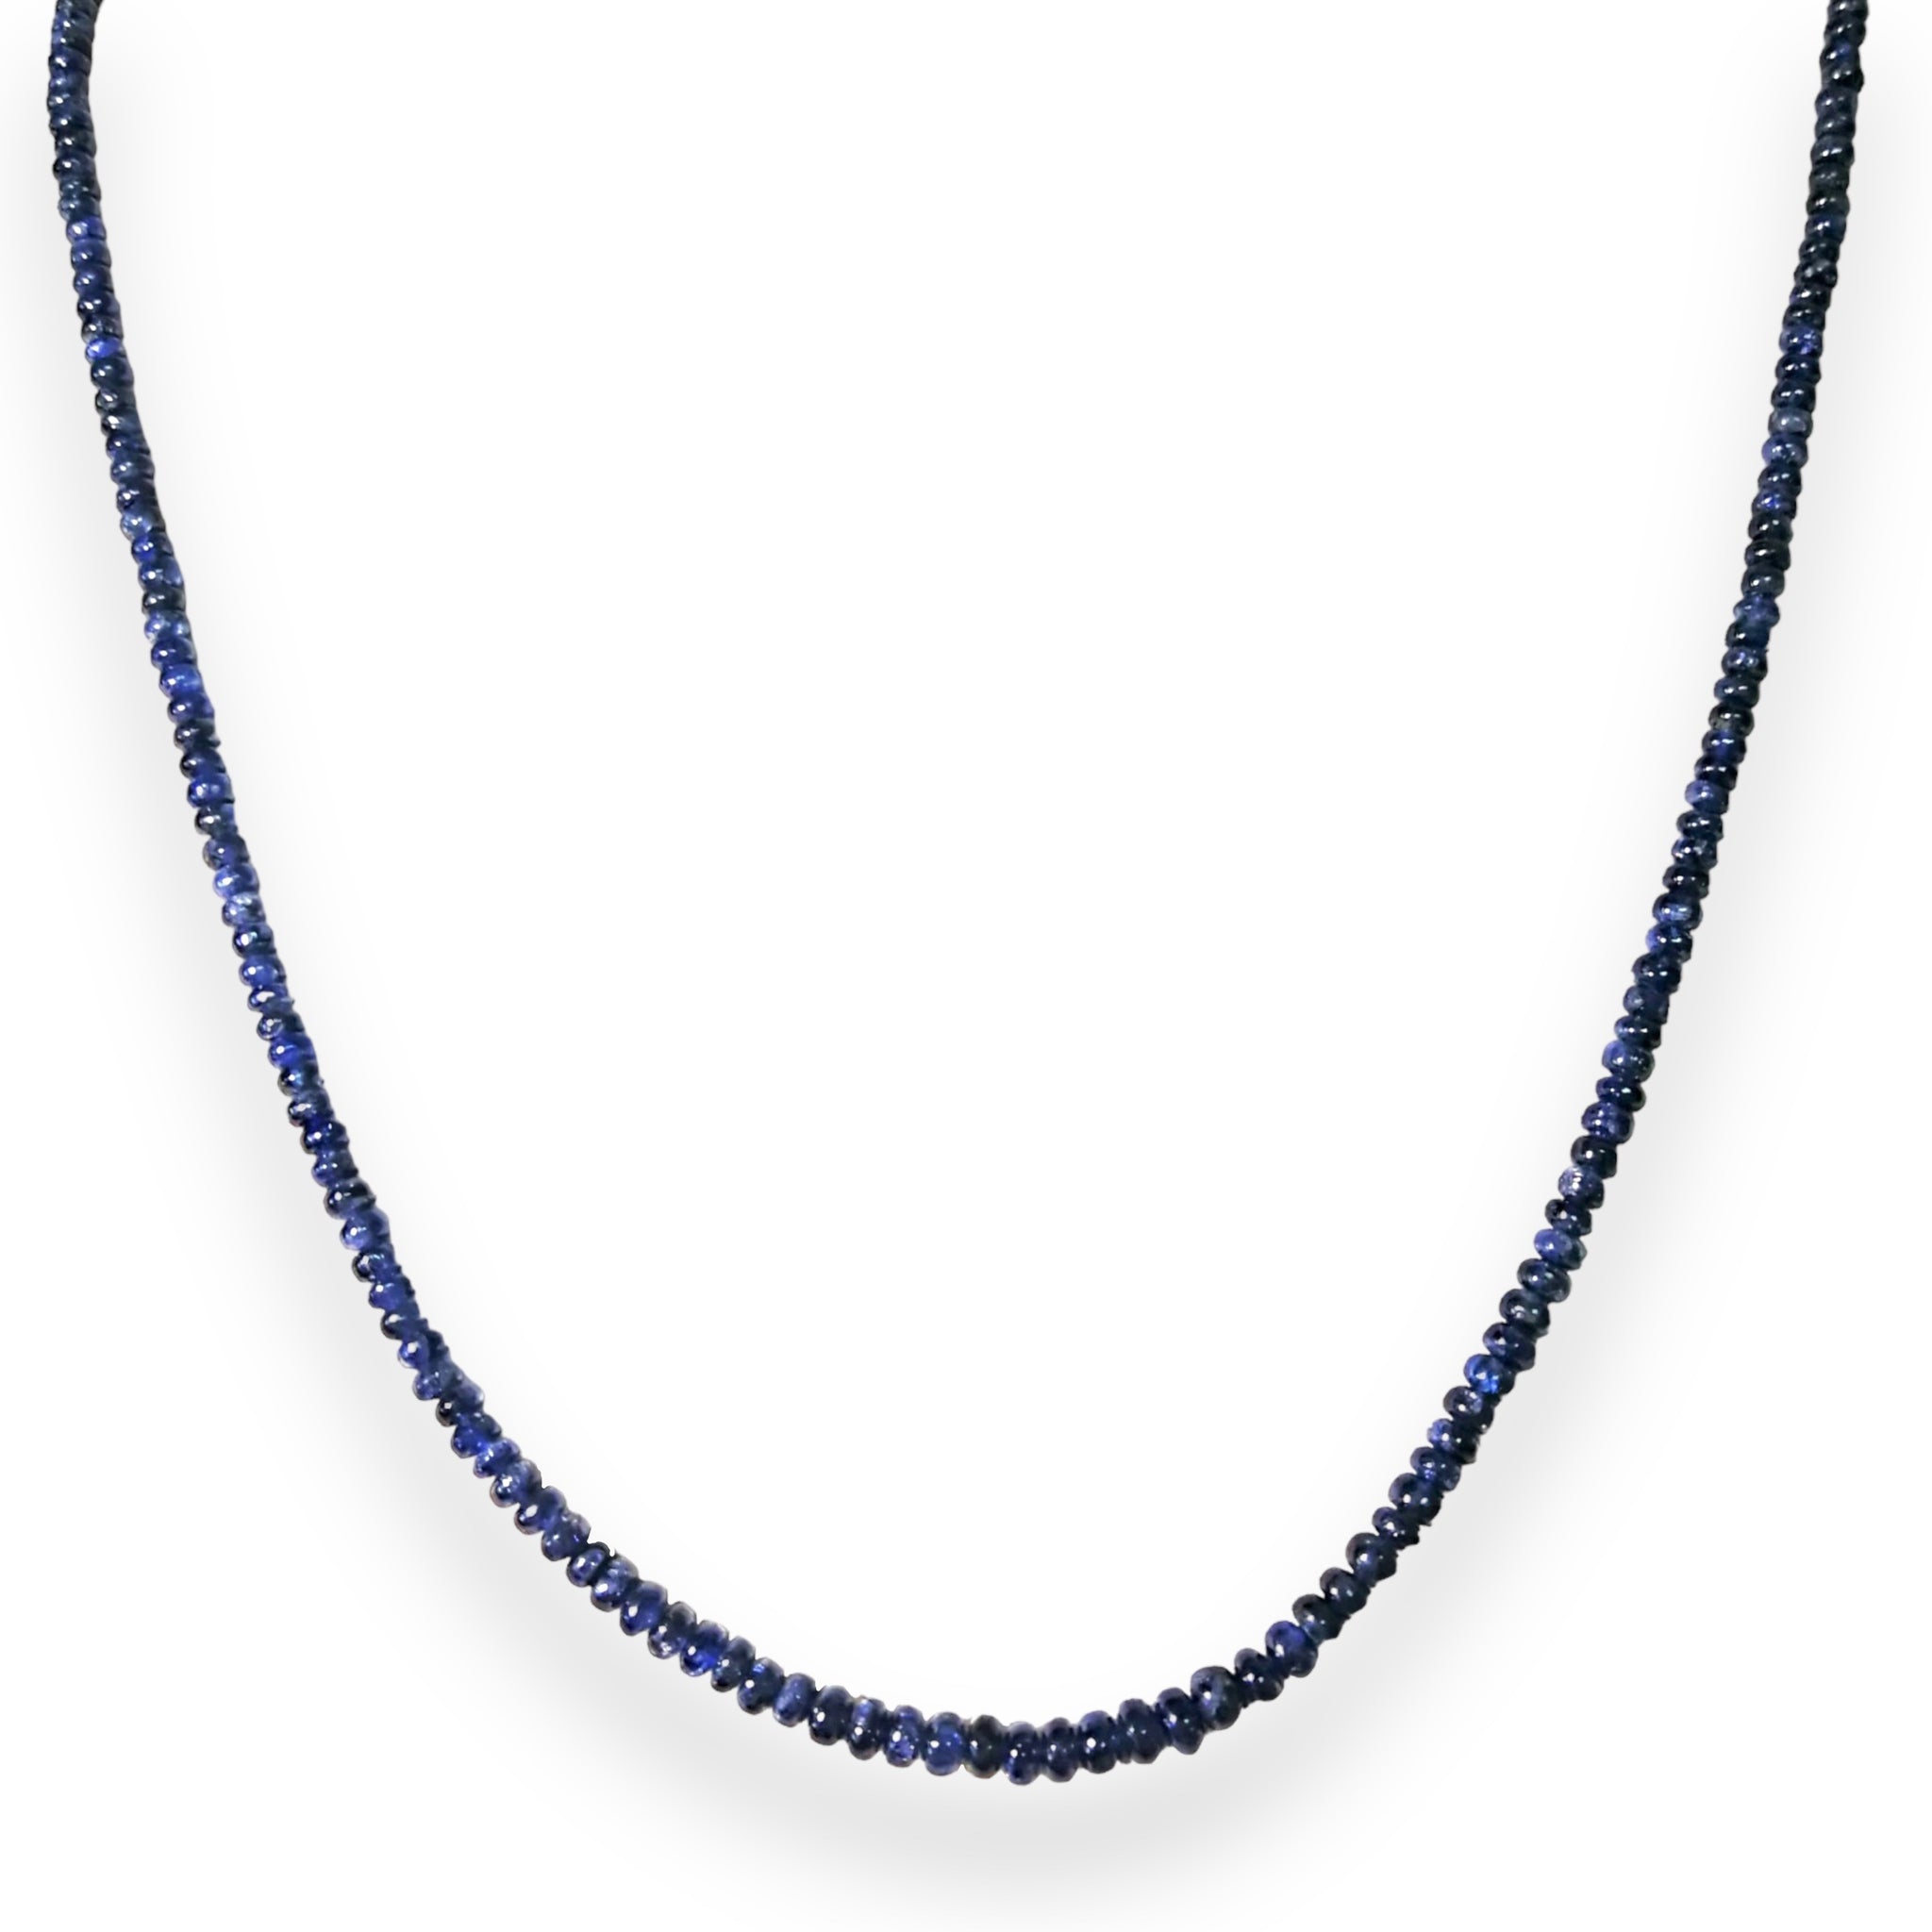 Natural Handmade Necklace Blue Sapphire Gemstone Plain Ball Birthstone Jewelry